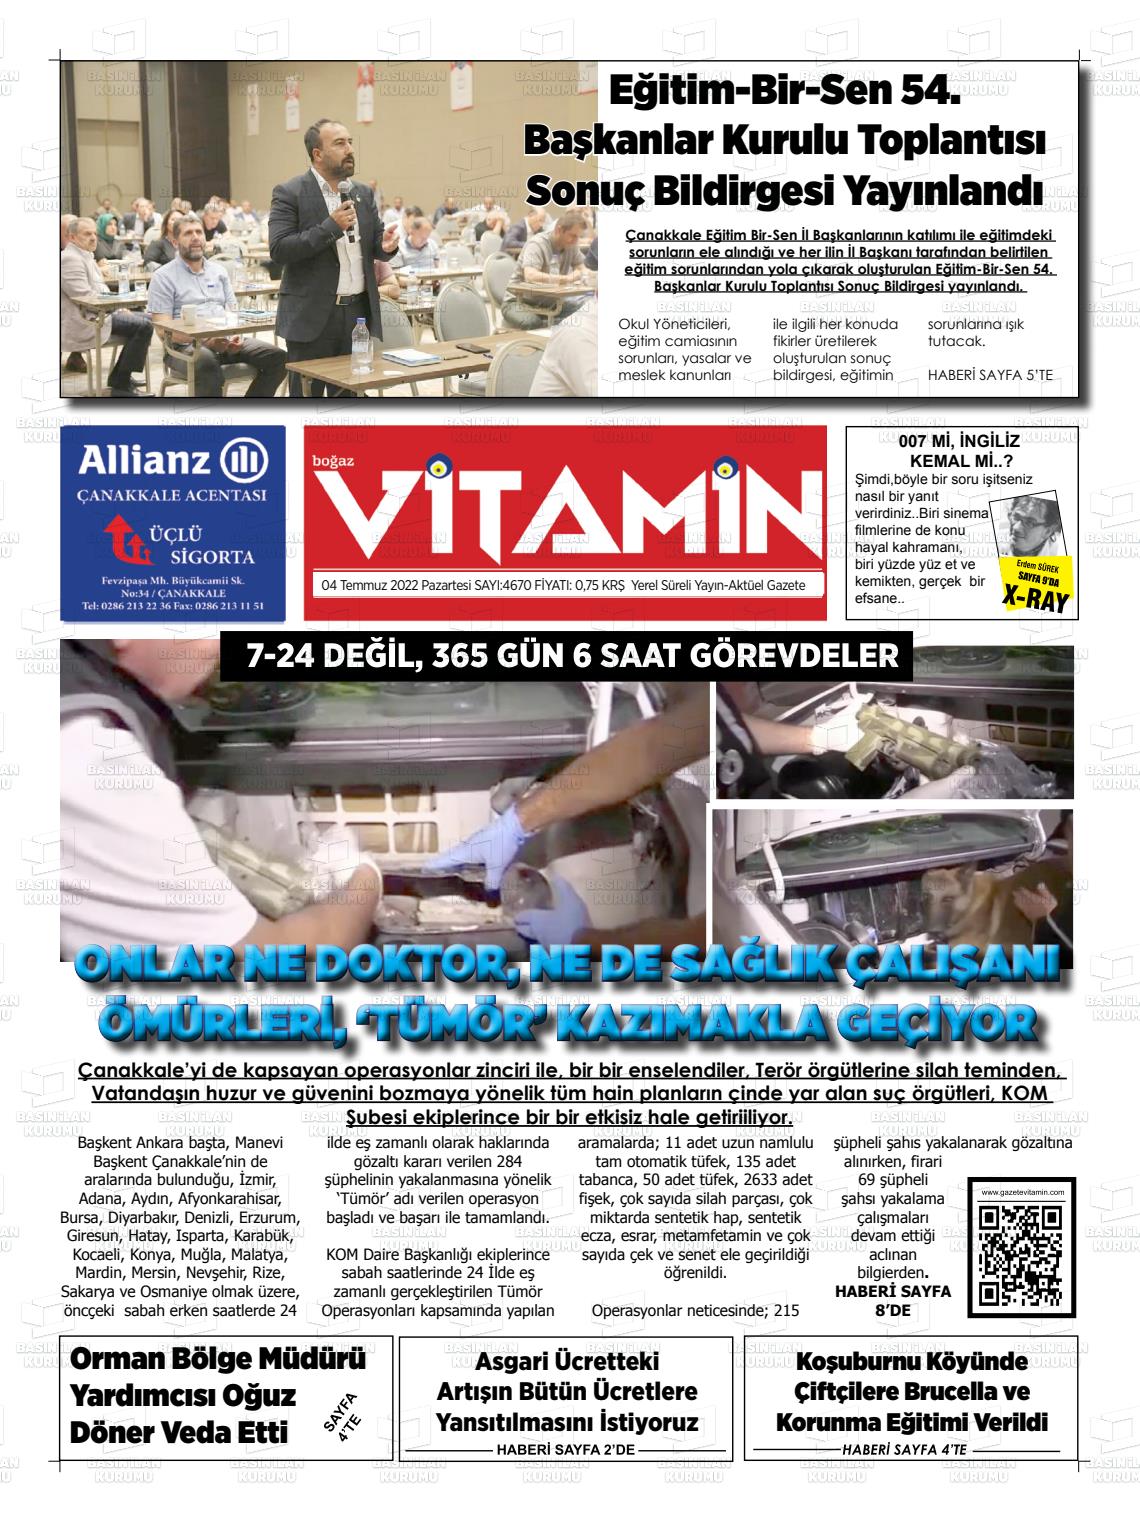 04 Temmuz 2022 Gazete Vitamin Gazete Manşeti